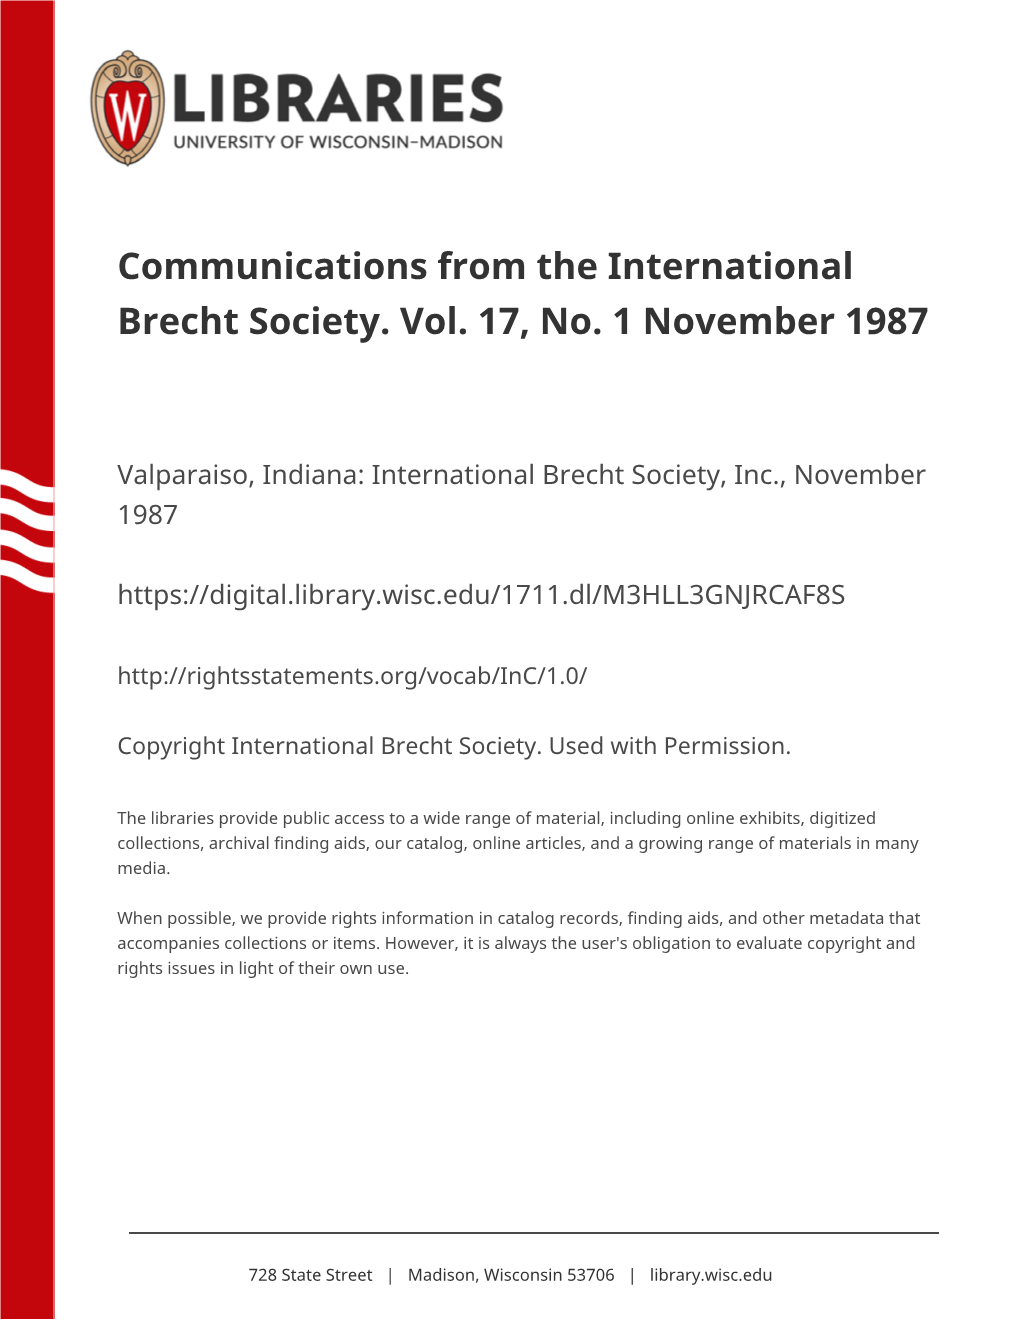 Communications from the International Brecht Society. Vol. 17, No. 1 November 1987